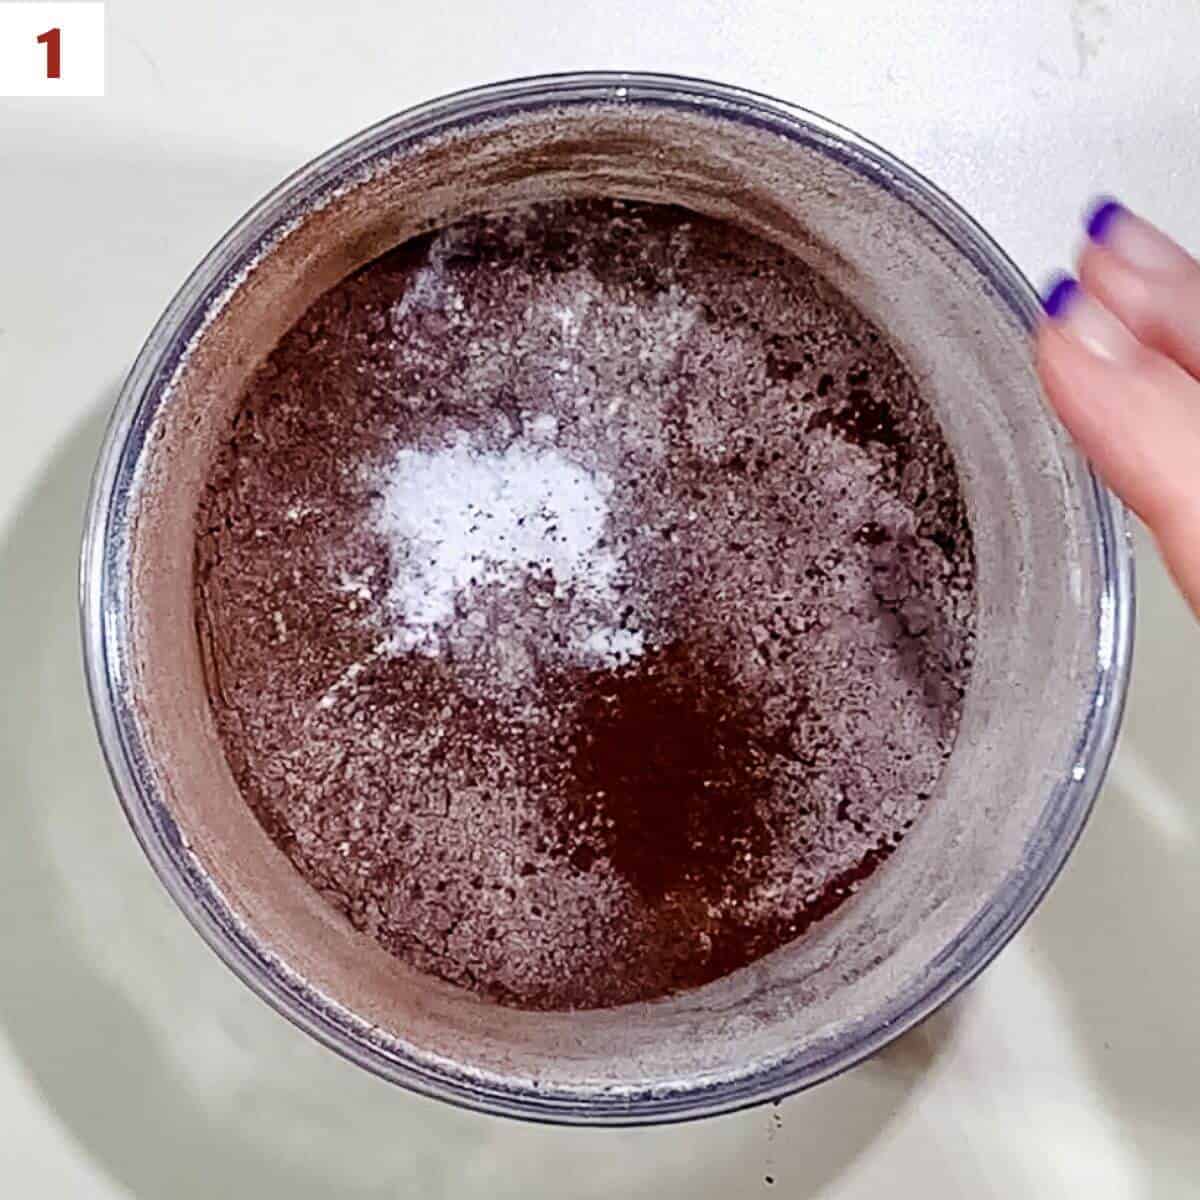 Mixing flour, cocoa powder, espresso powder, baking powder, and salt in a small bowl.